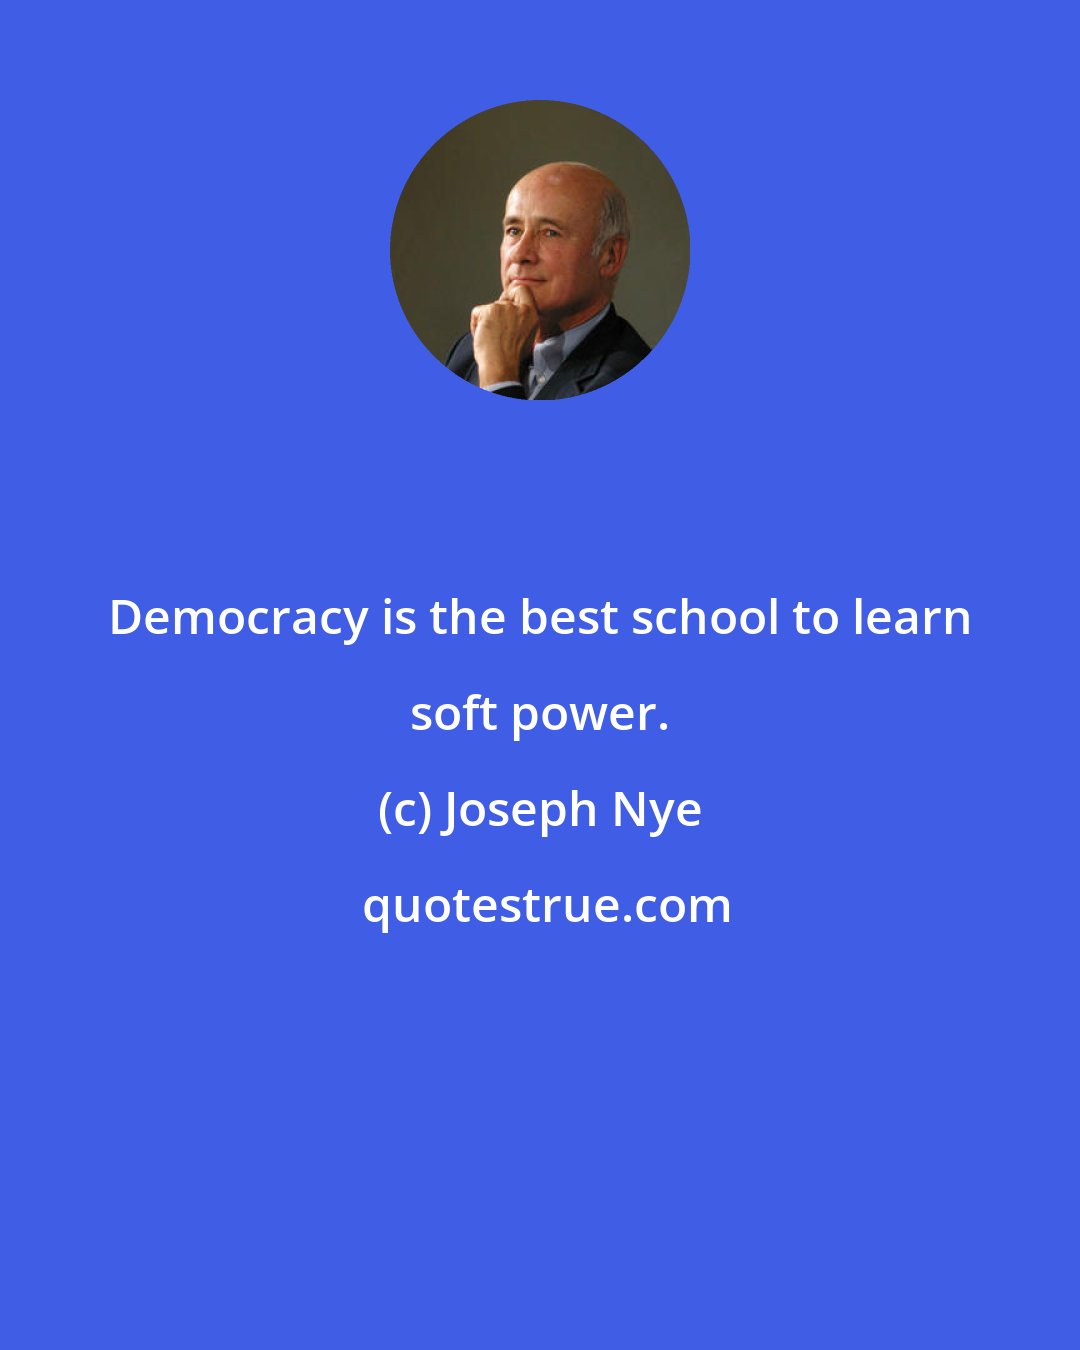 Joseph Nye: Democracy is the best school to learn soft power.